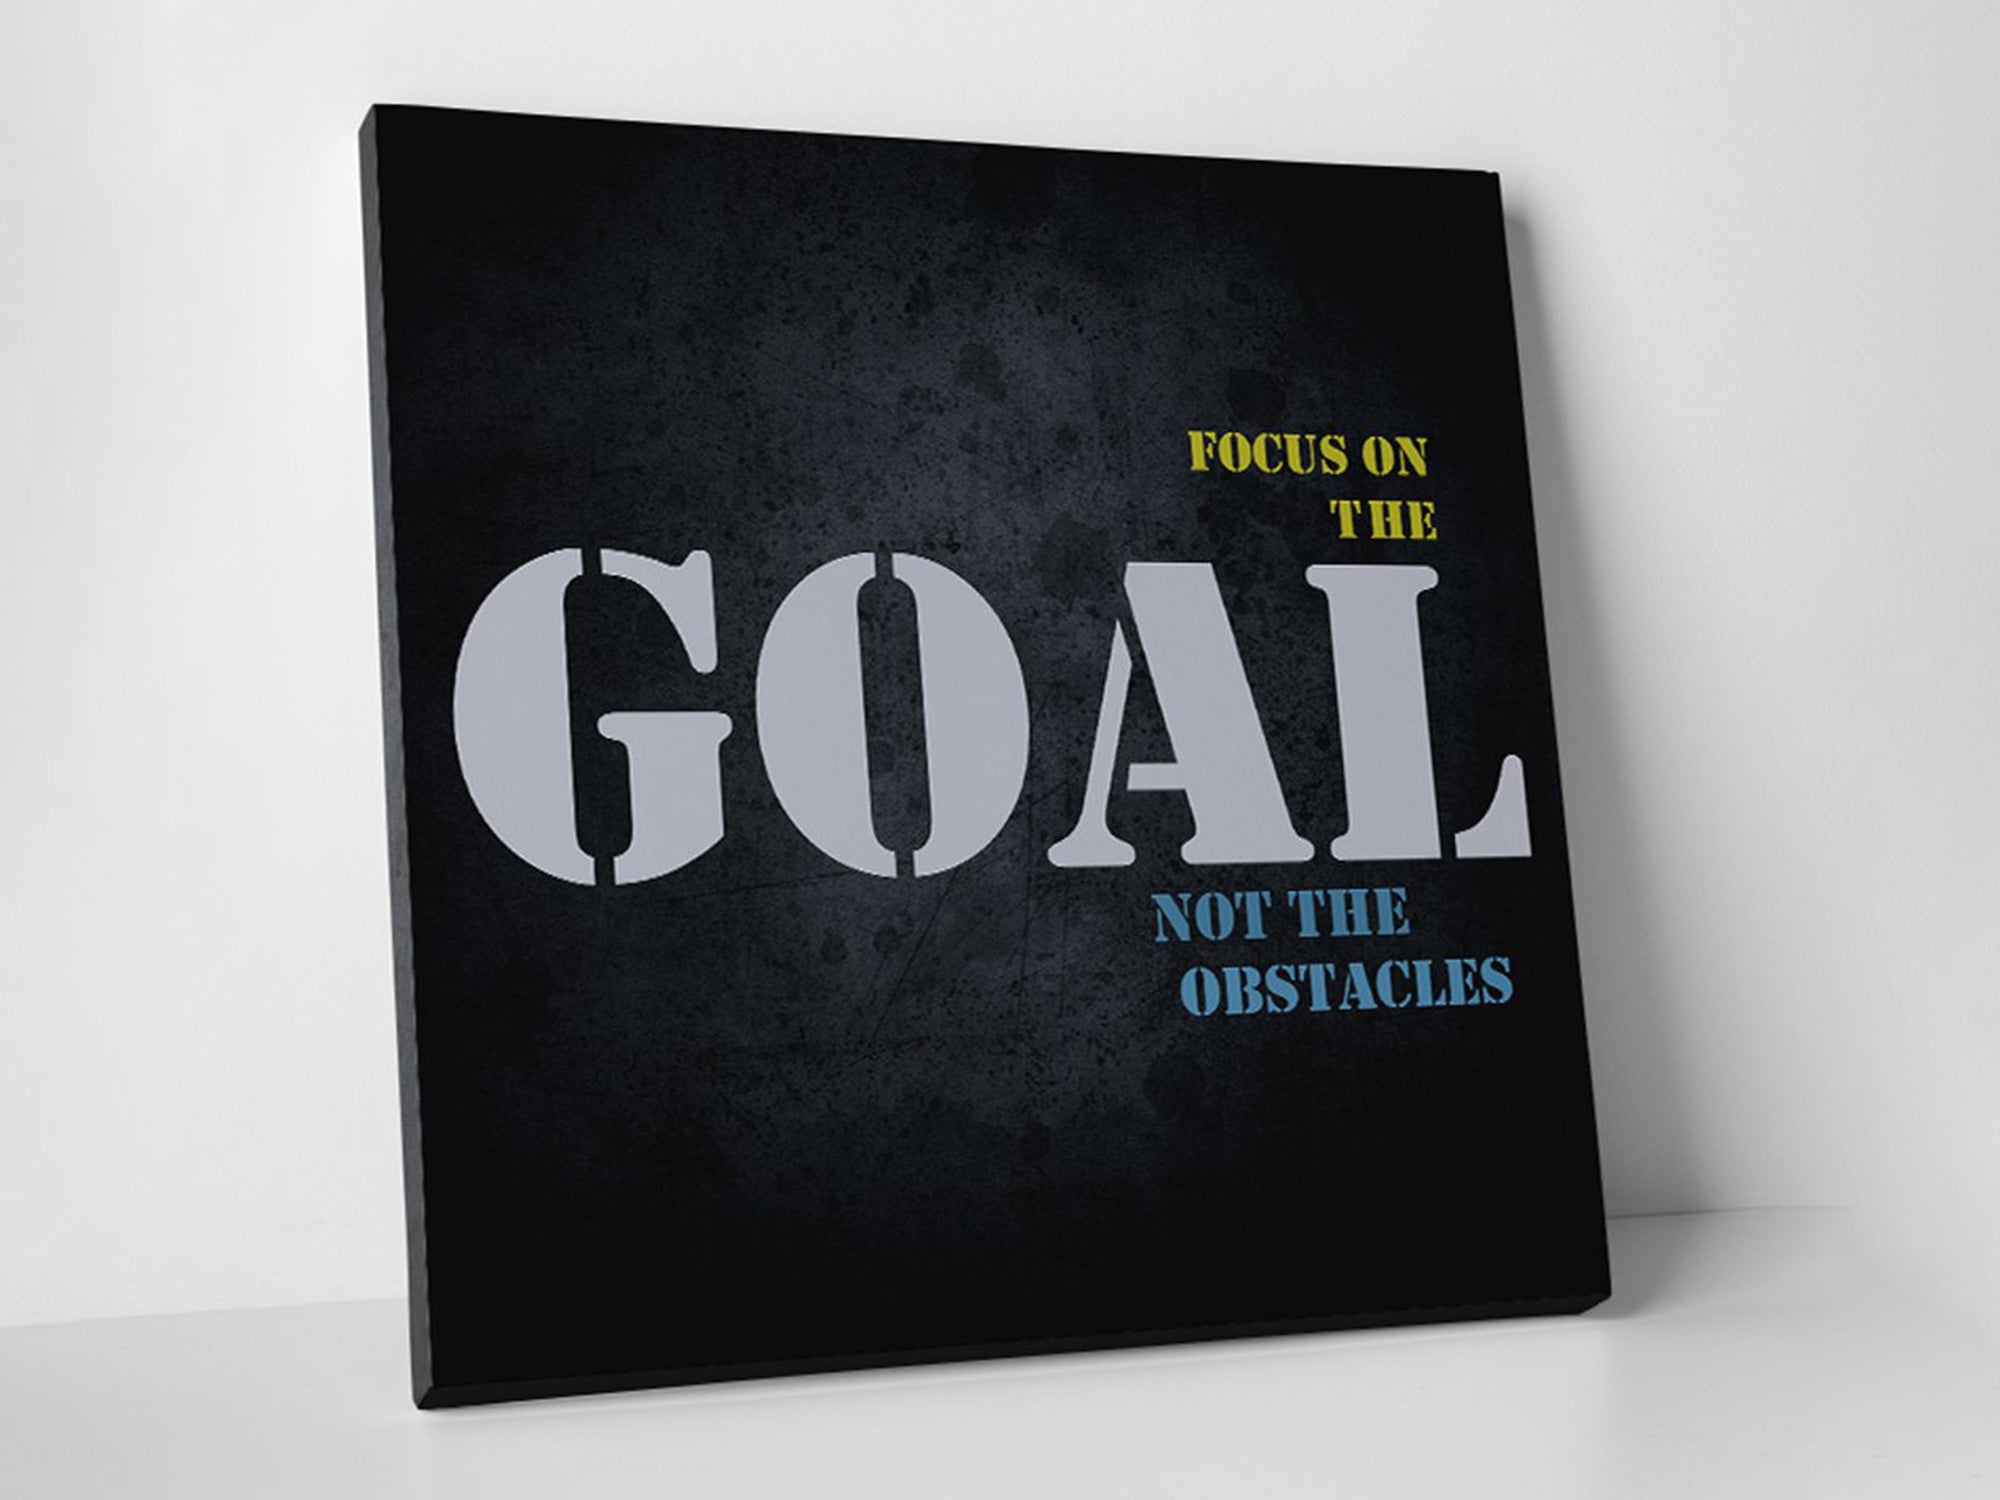 Focus On the Goal - Motivational - Canvas Wall Art